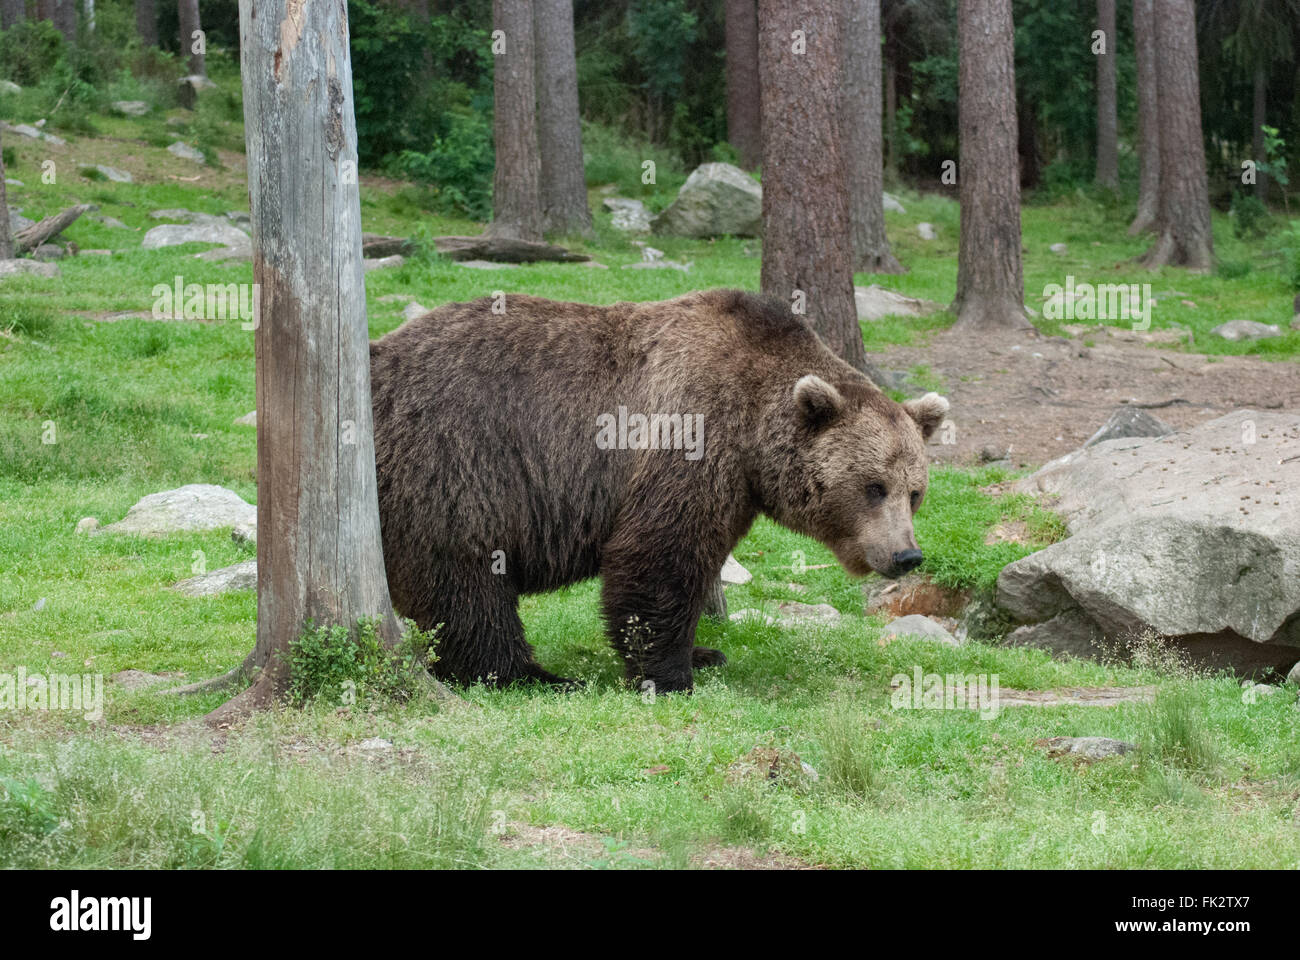 European brown bear or Eurasian brown bear (Ursus arctos arctos) in Taiga forest in eastern Finland. Stock Photo